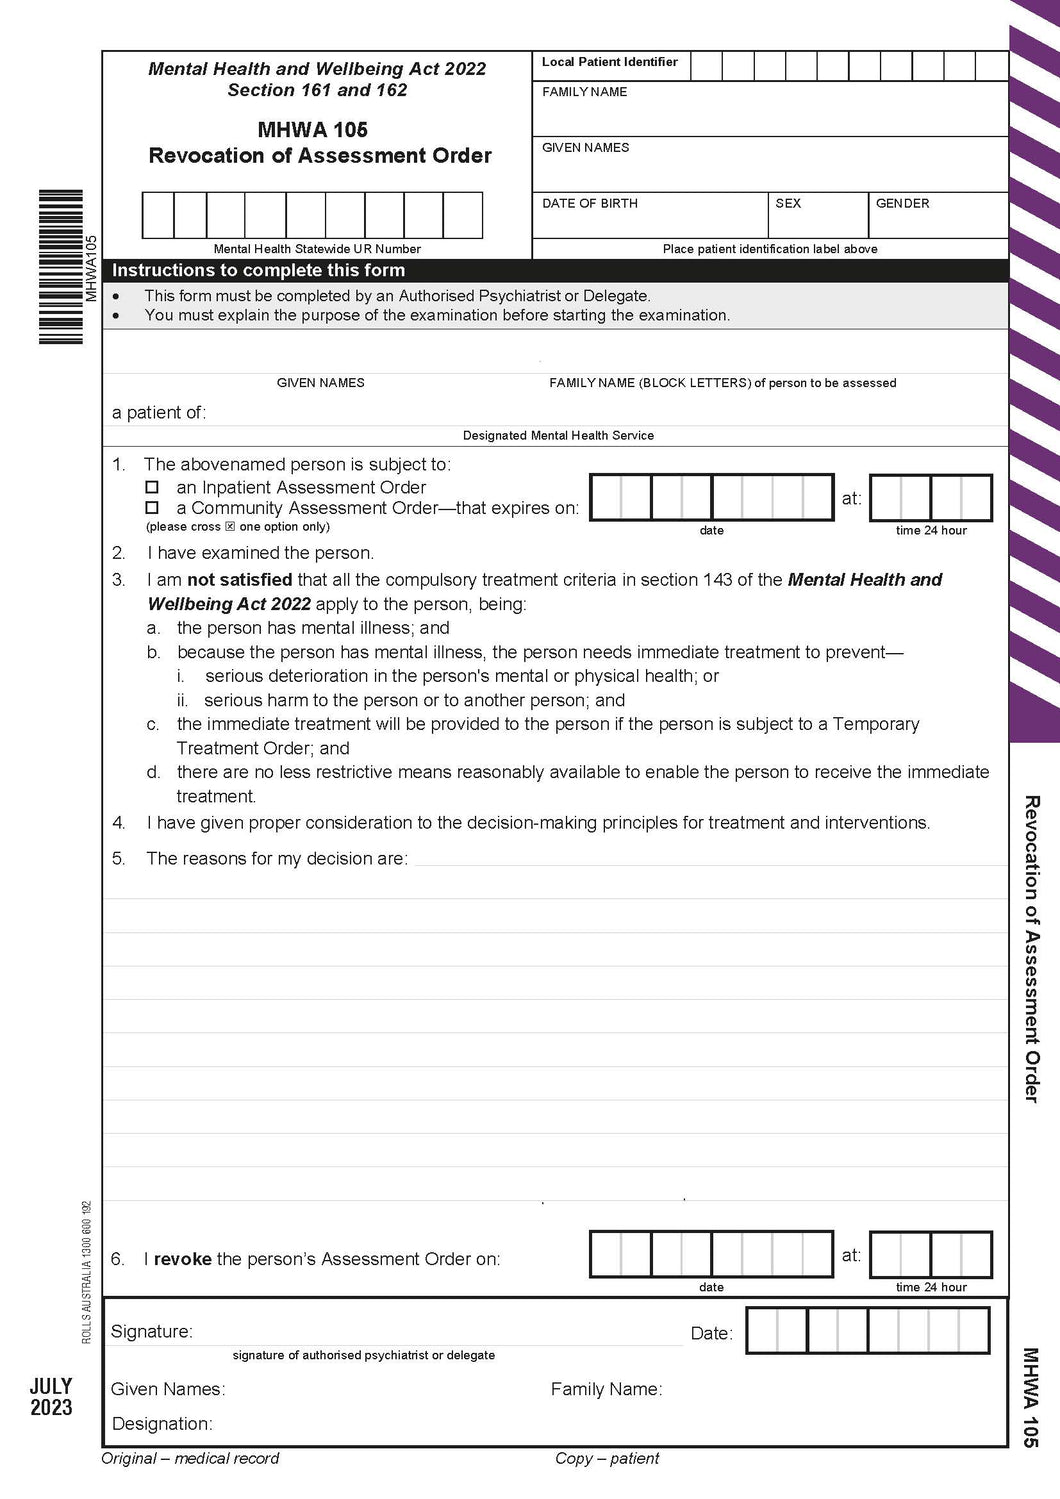 Rolls MHWA105 Revocation of Assessment Order 2 part sets